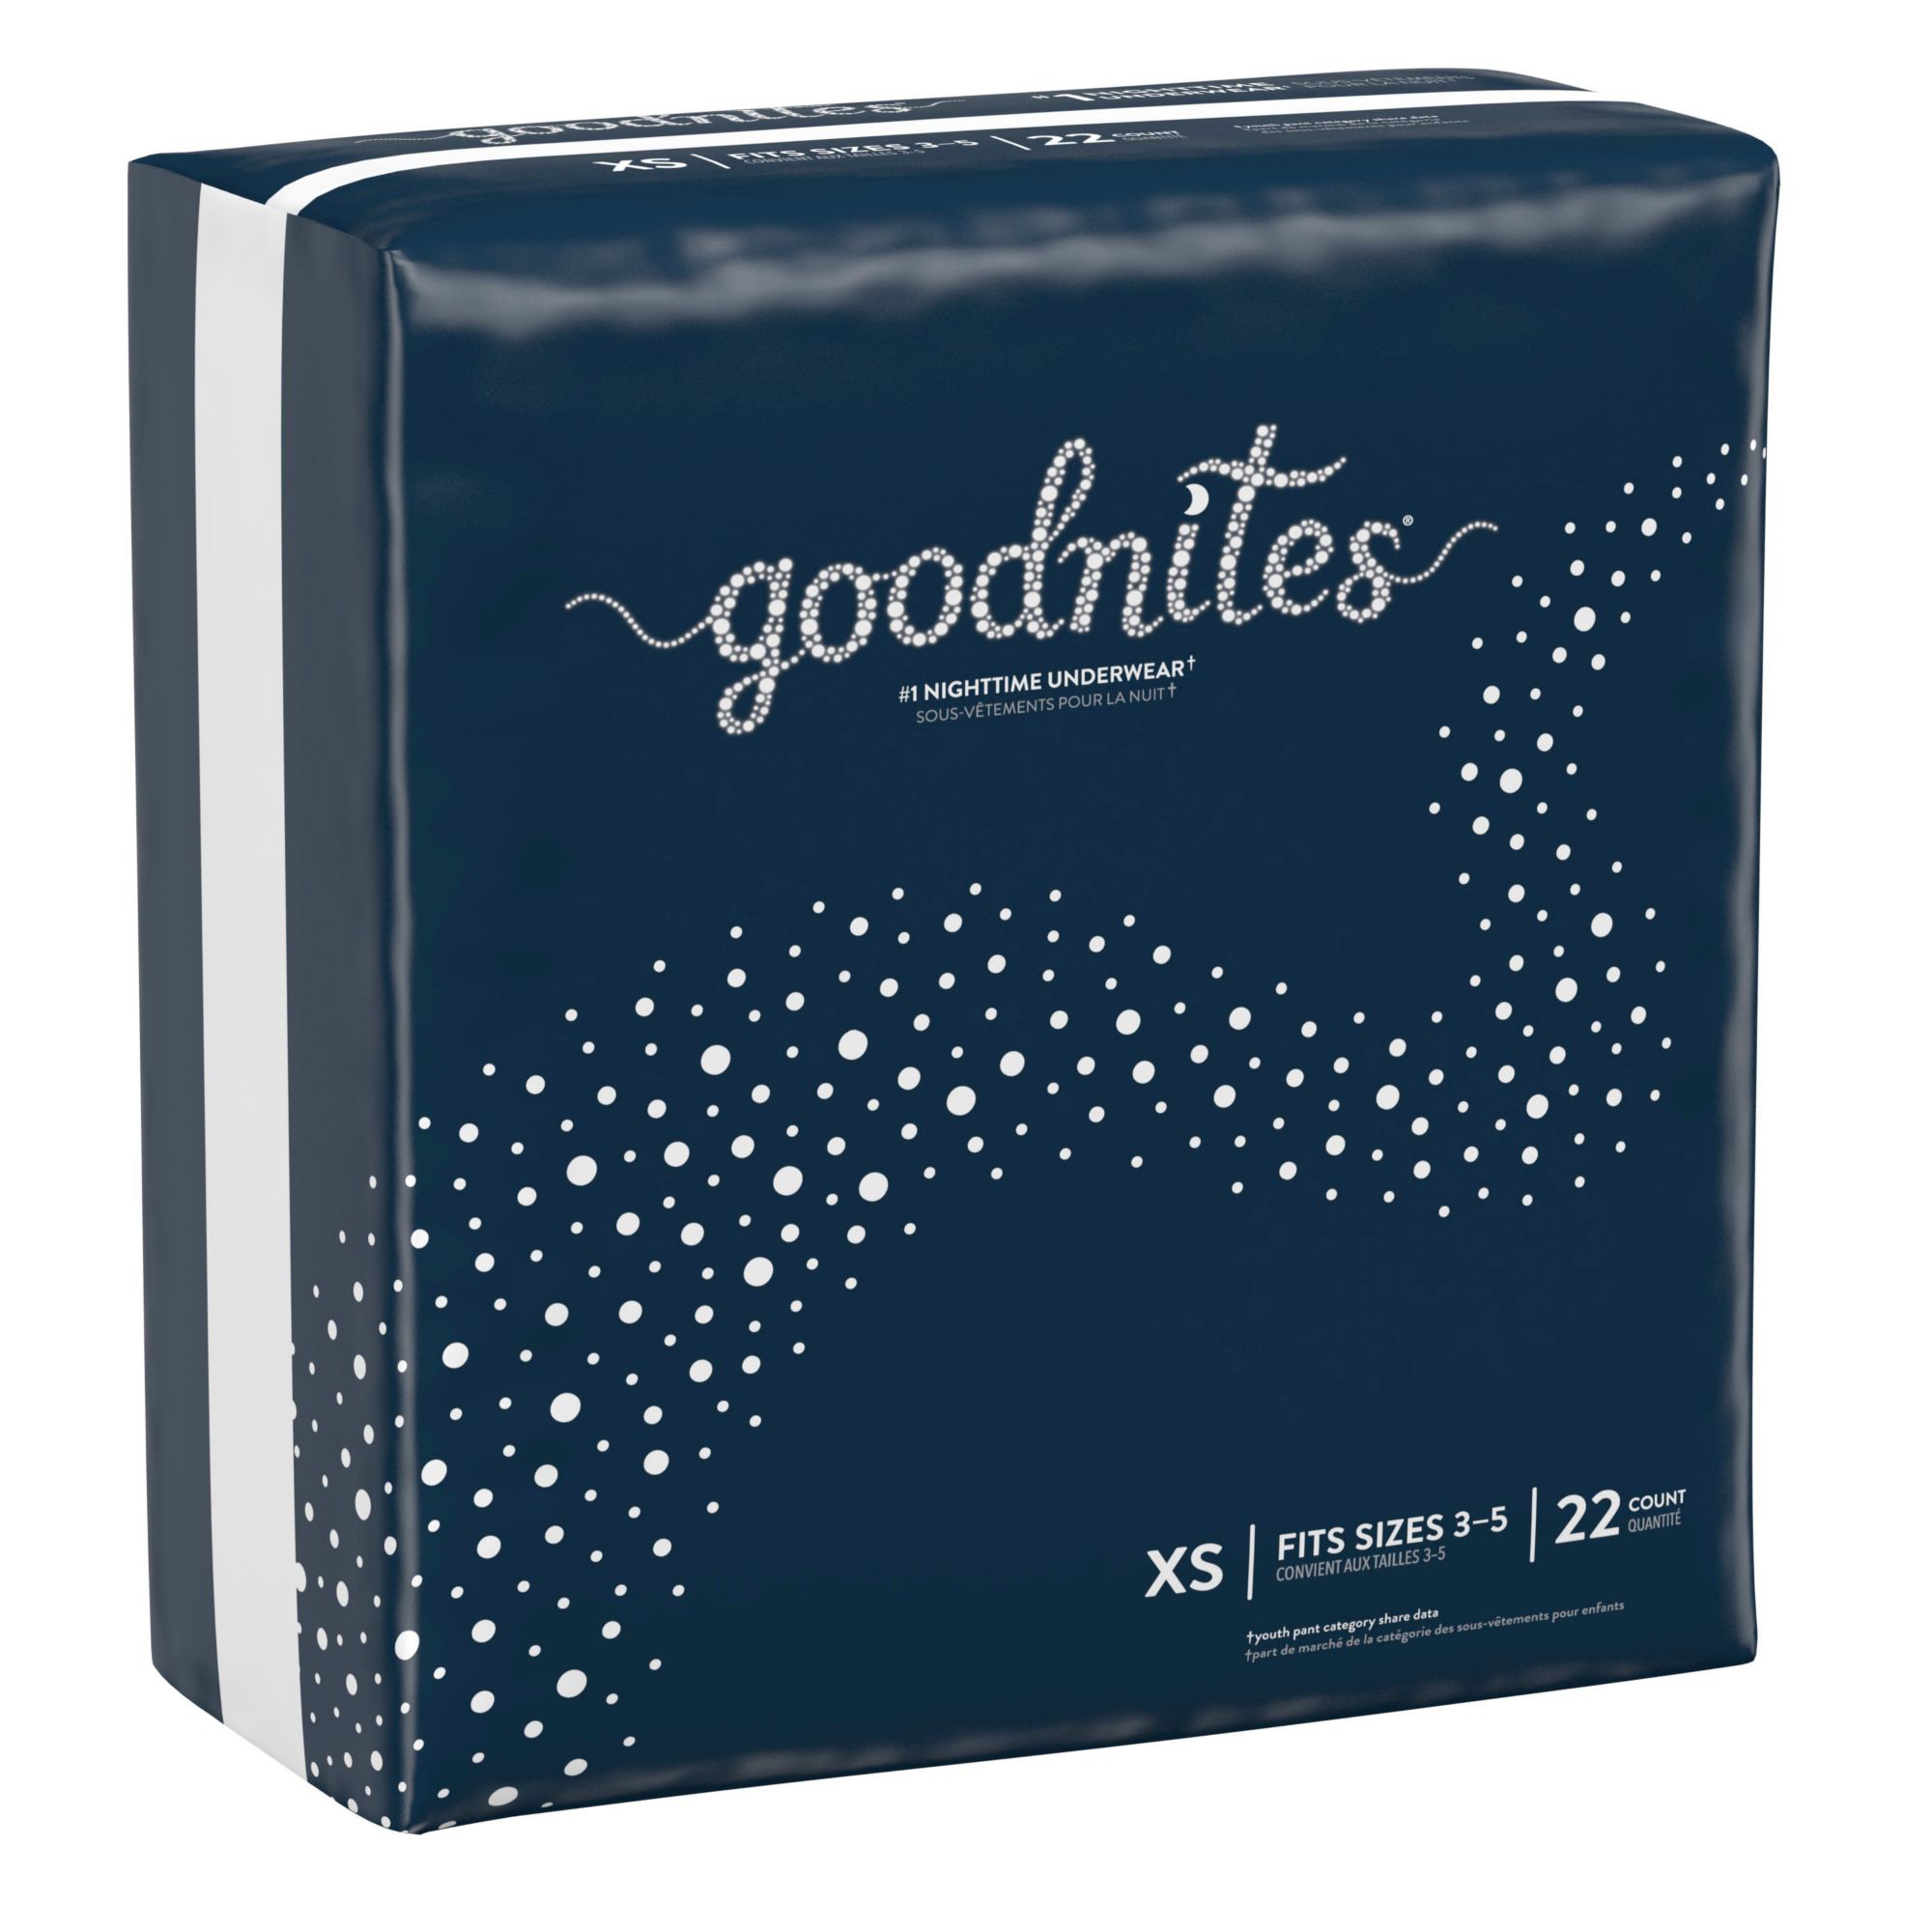 goodnites Girls' Nighttime Bedwetting Underwear XS